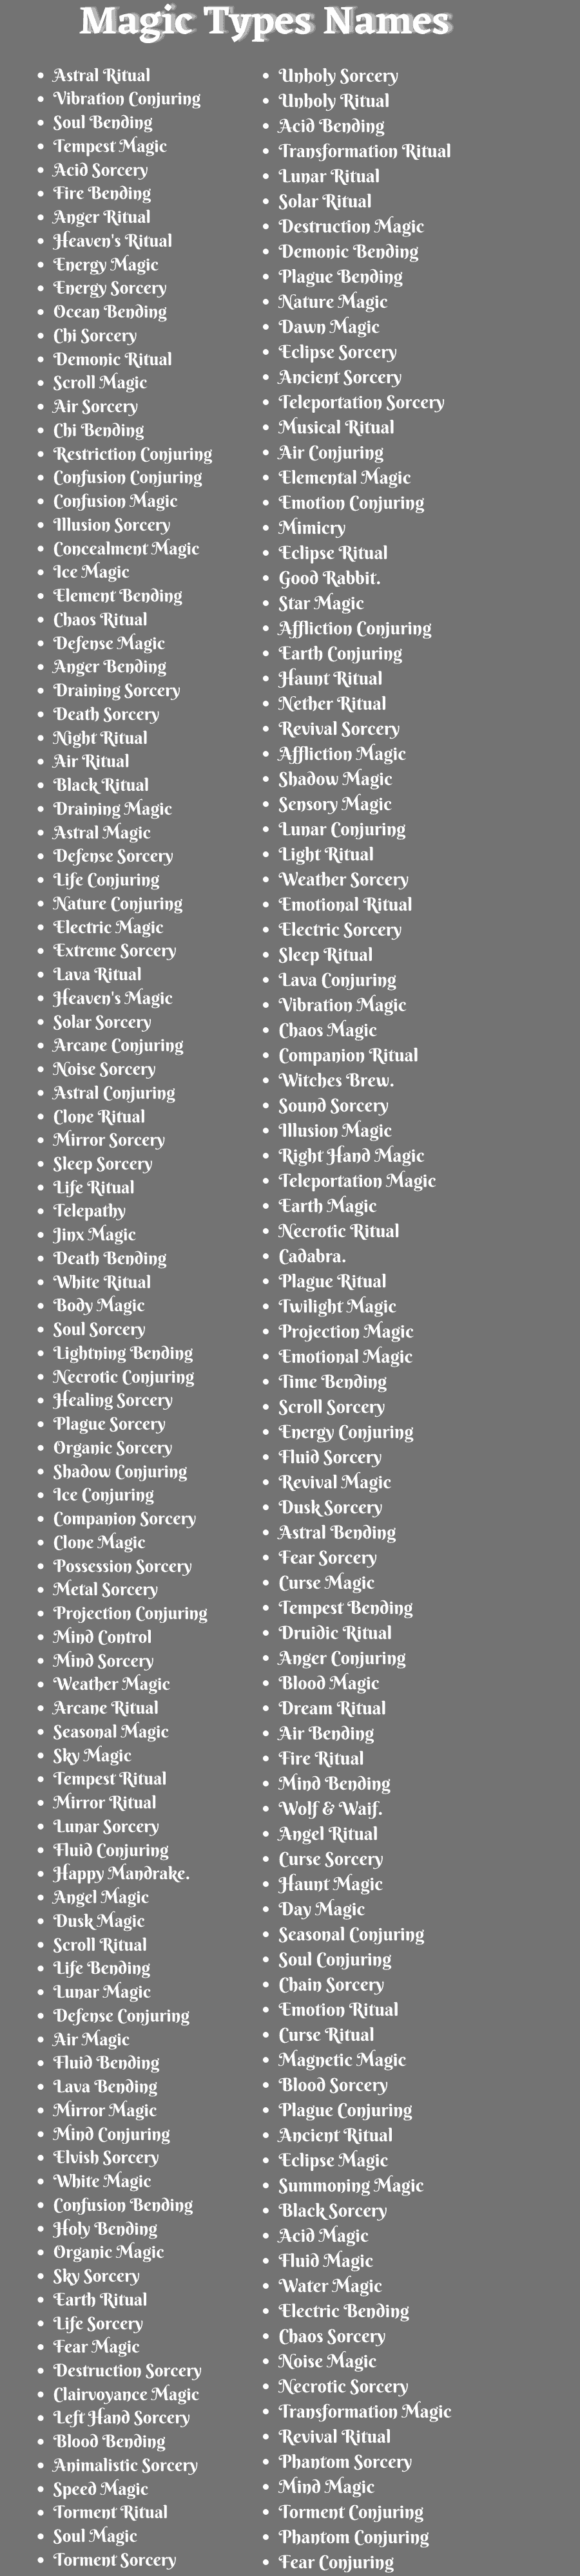 Magic Types Names